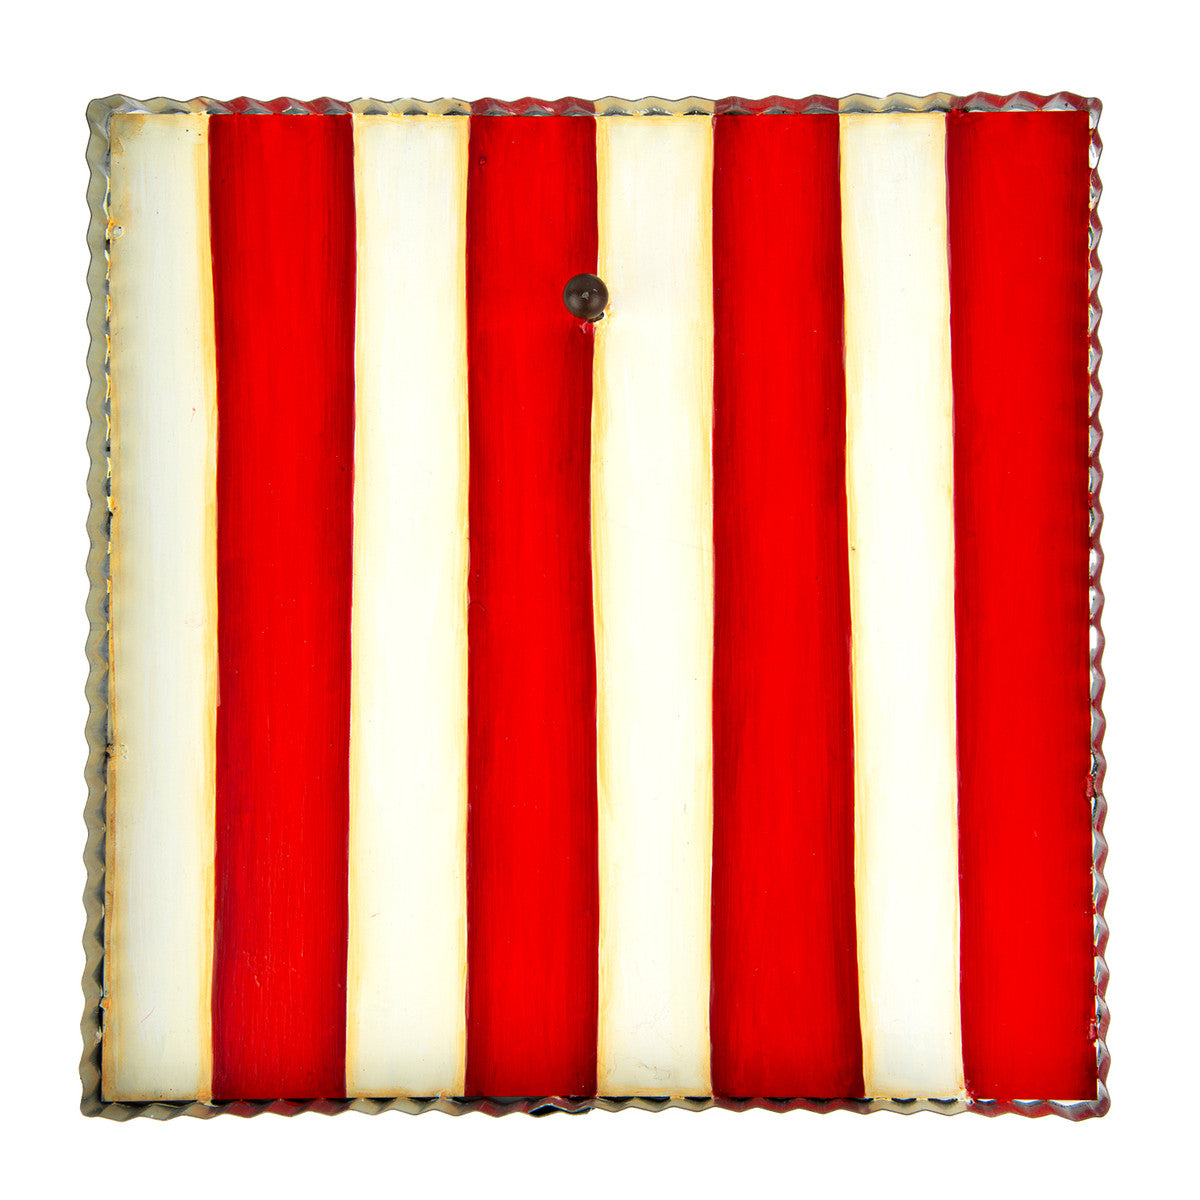 Red & White Striped Mini Gallery Display Board